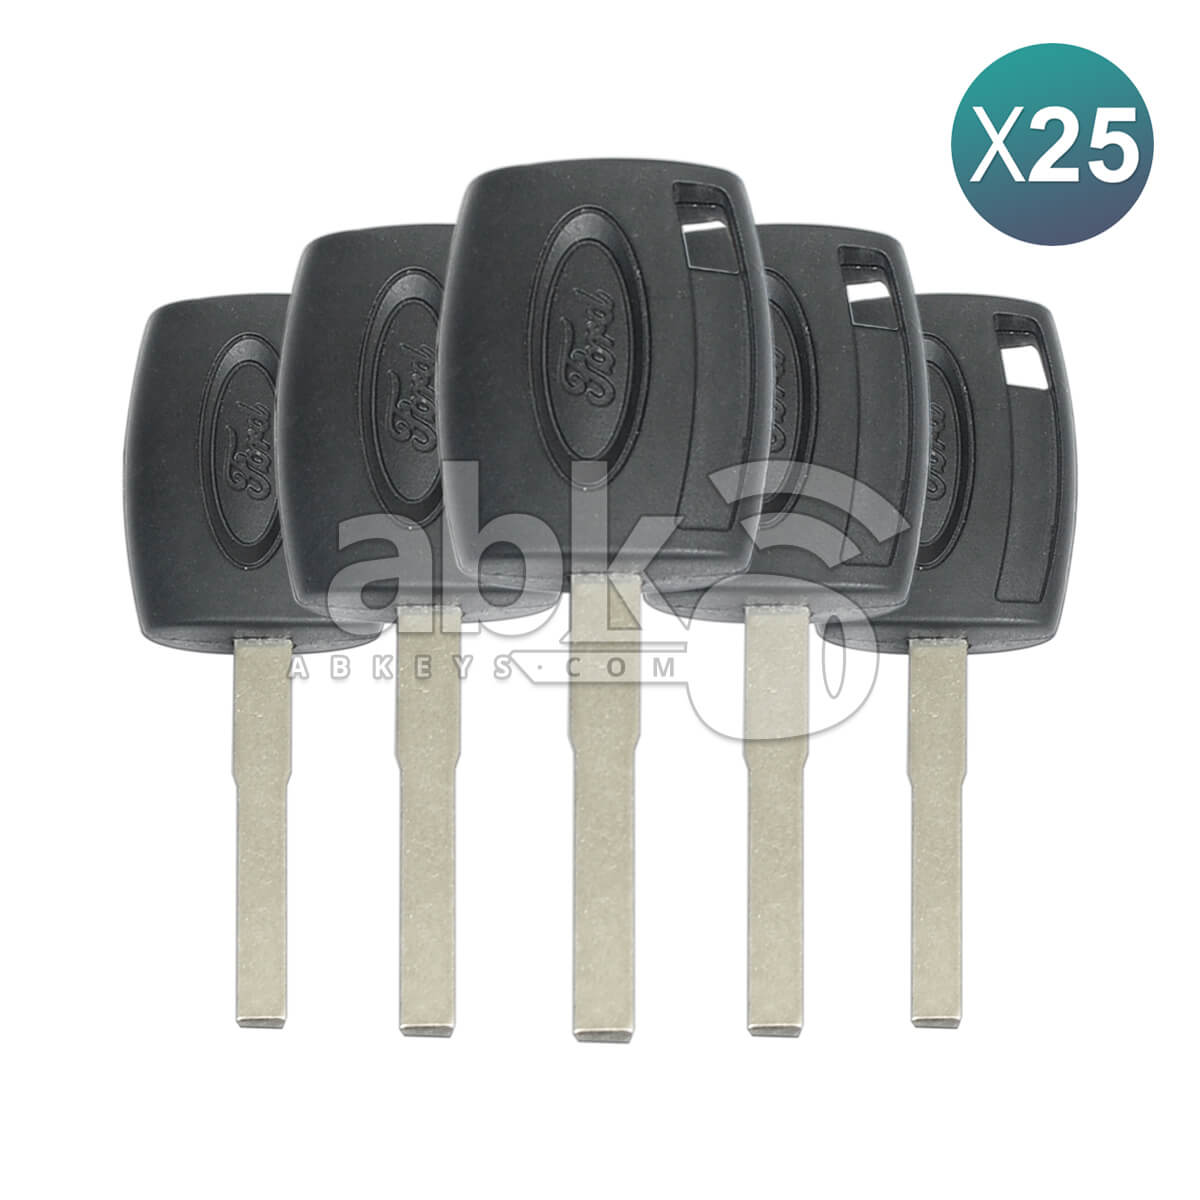 Ford Chip Less Key HU101 25Pcs Bundle - ABK-428-OFF25 - ABKEYS.COM